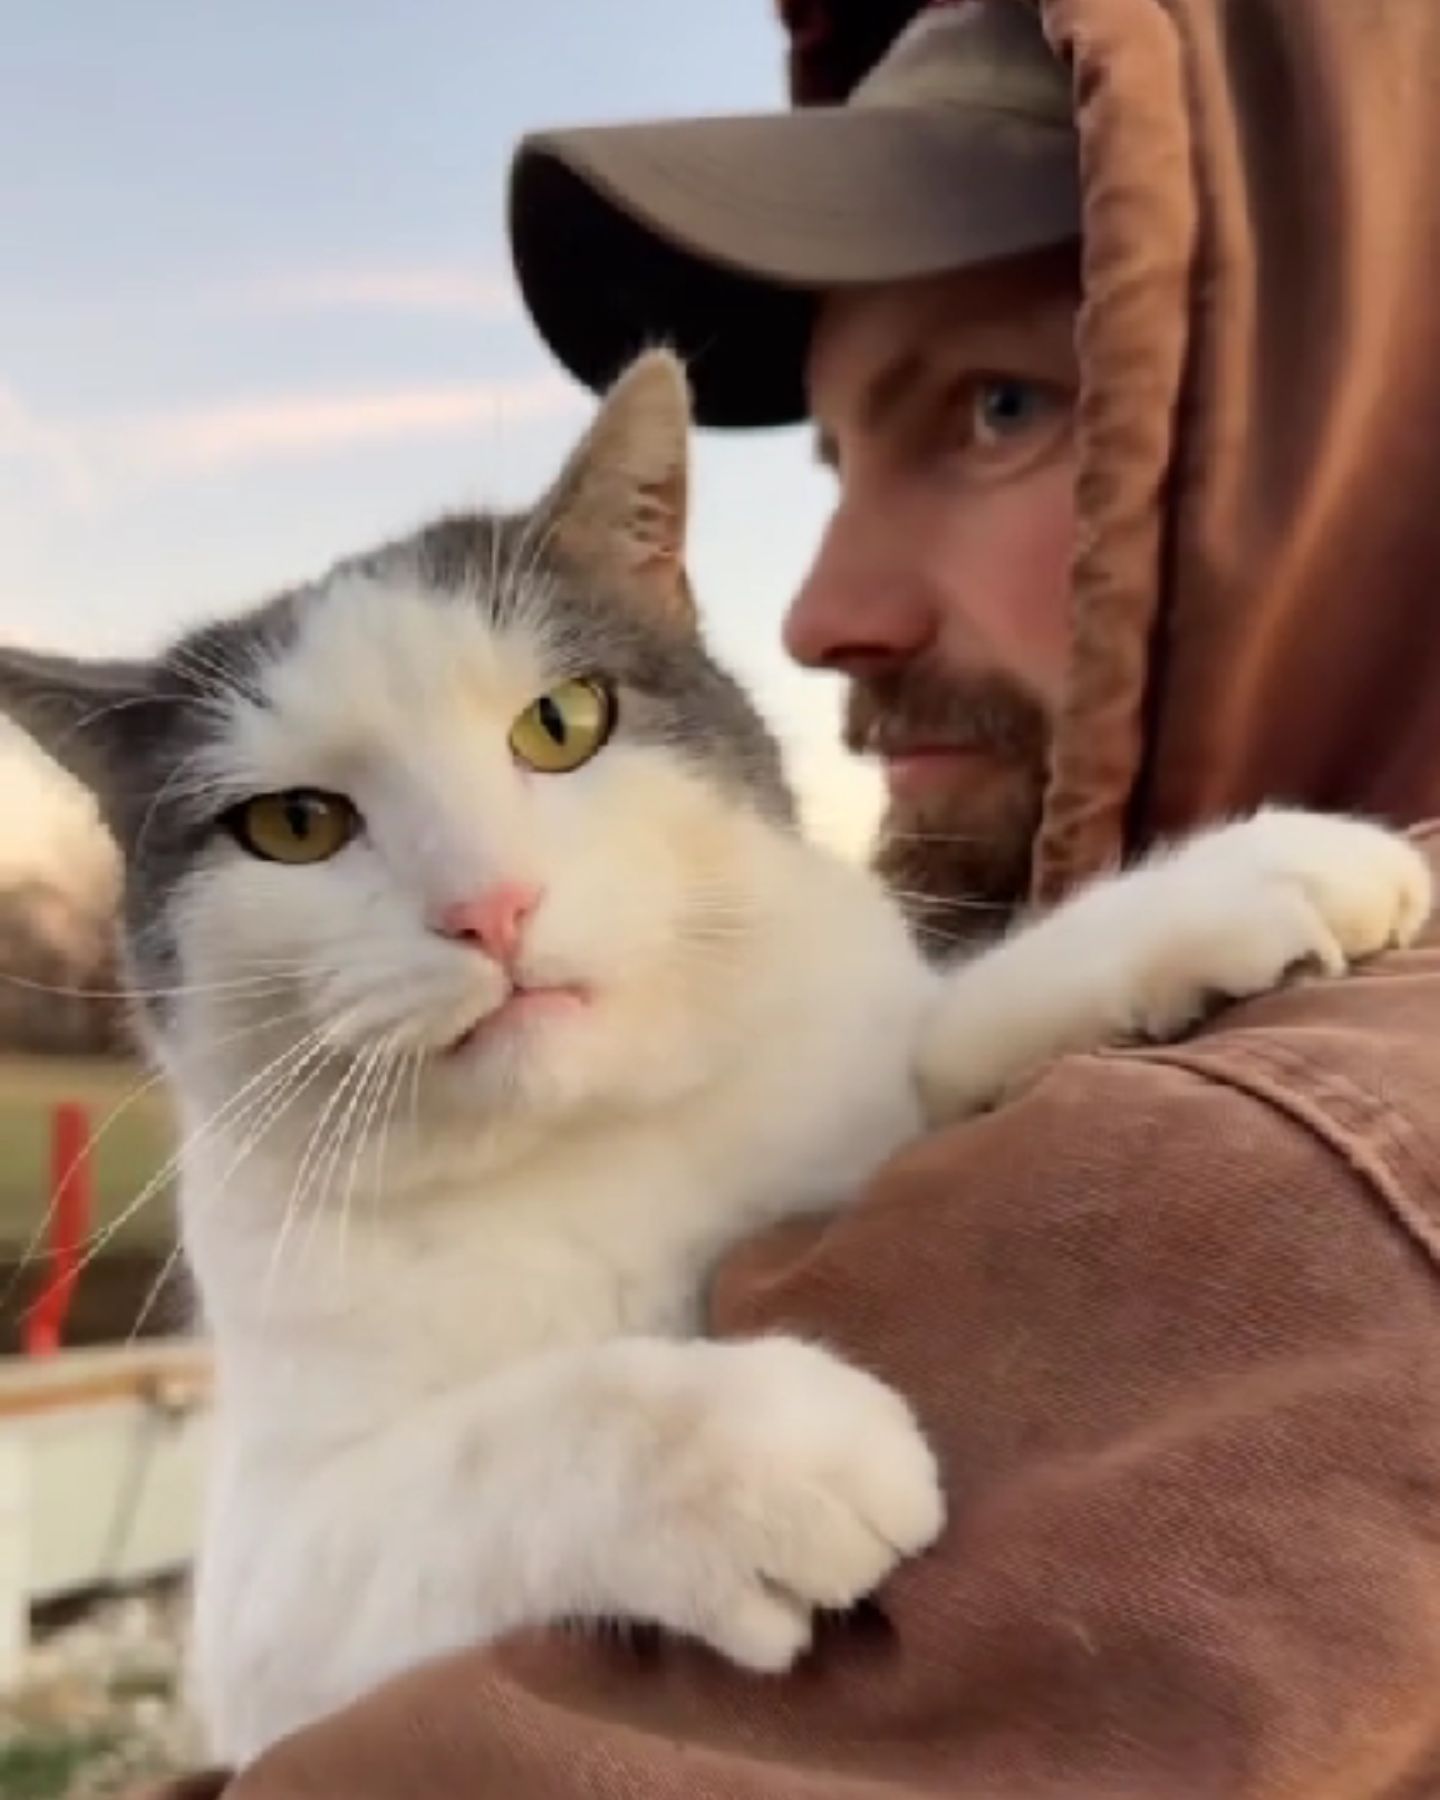 close-up photo of man holding farm cat